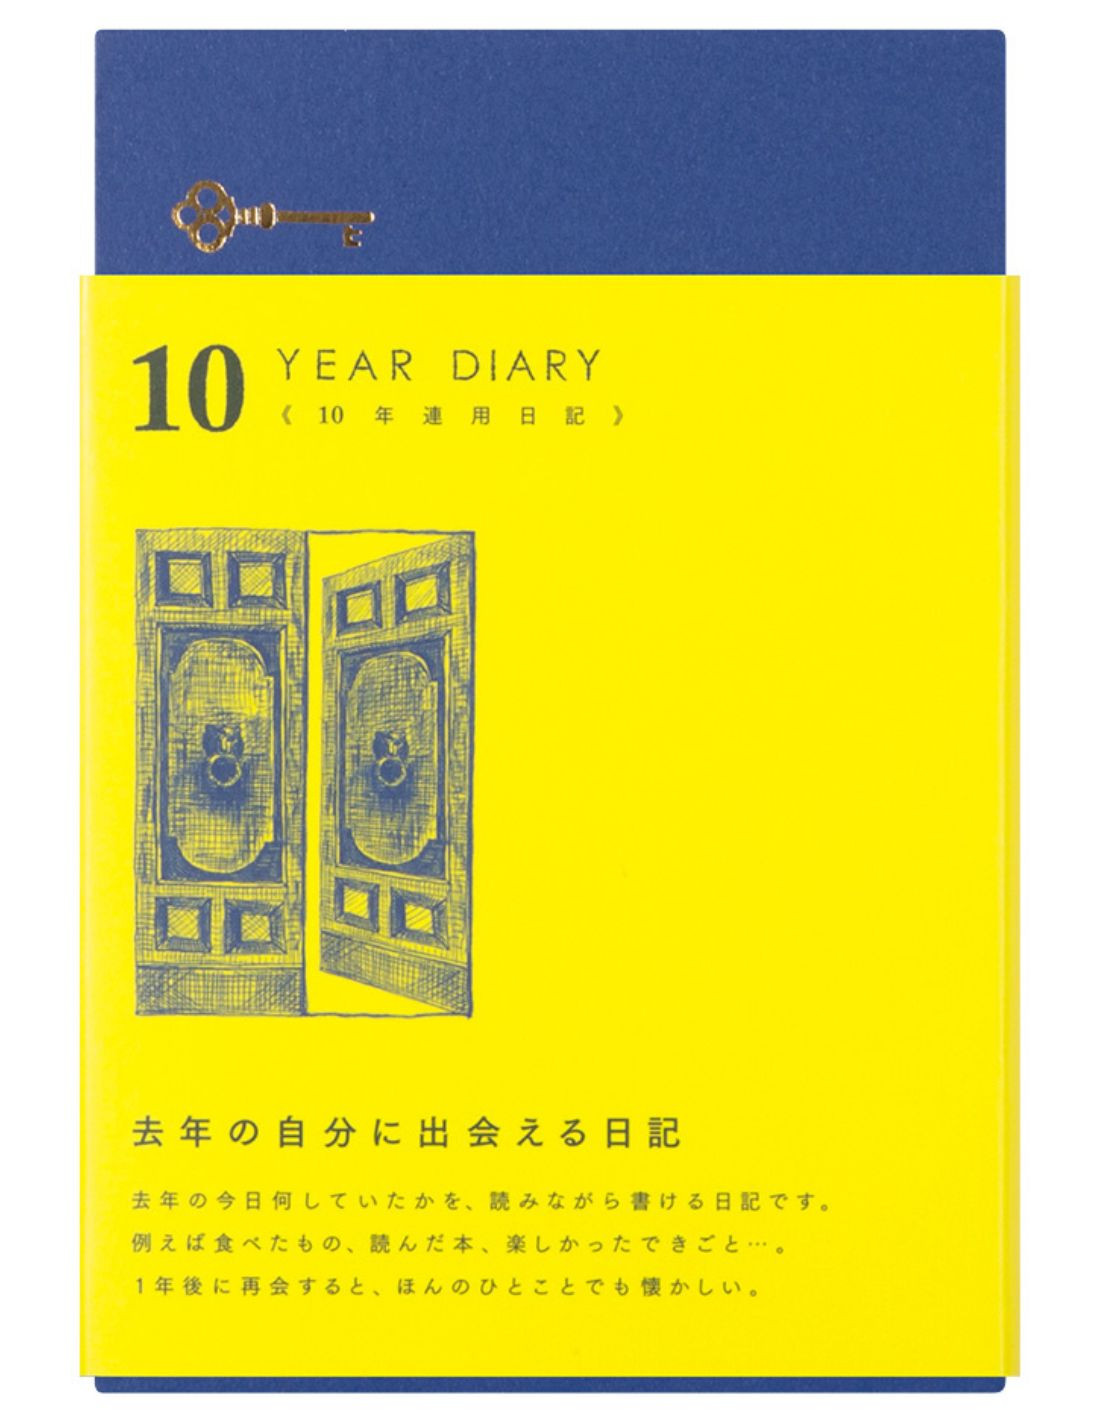 Midori 10 Year Diary - Navy Papeterie Makkura